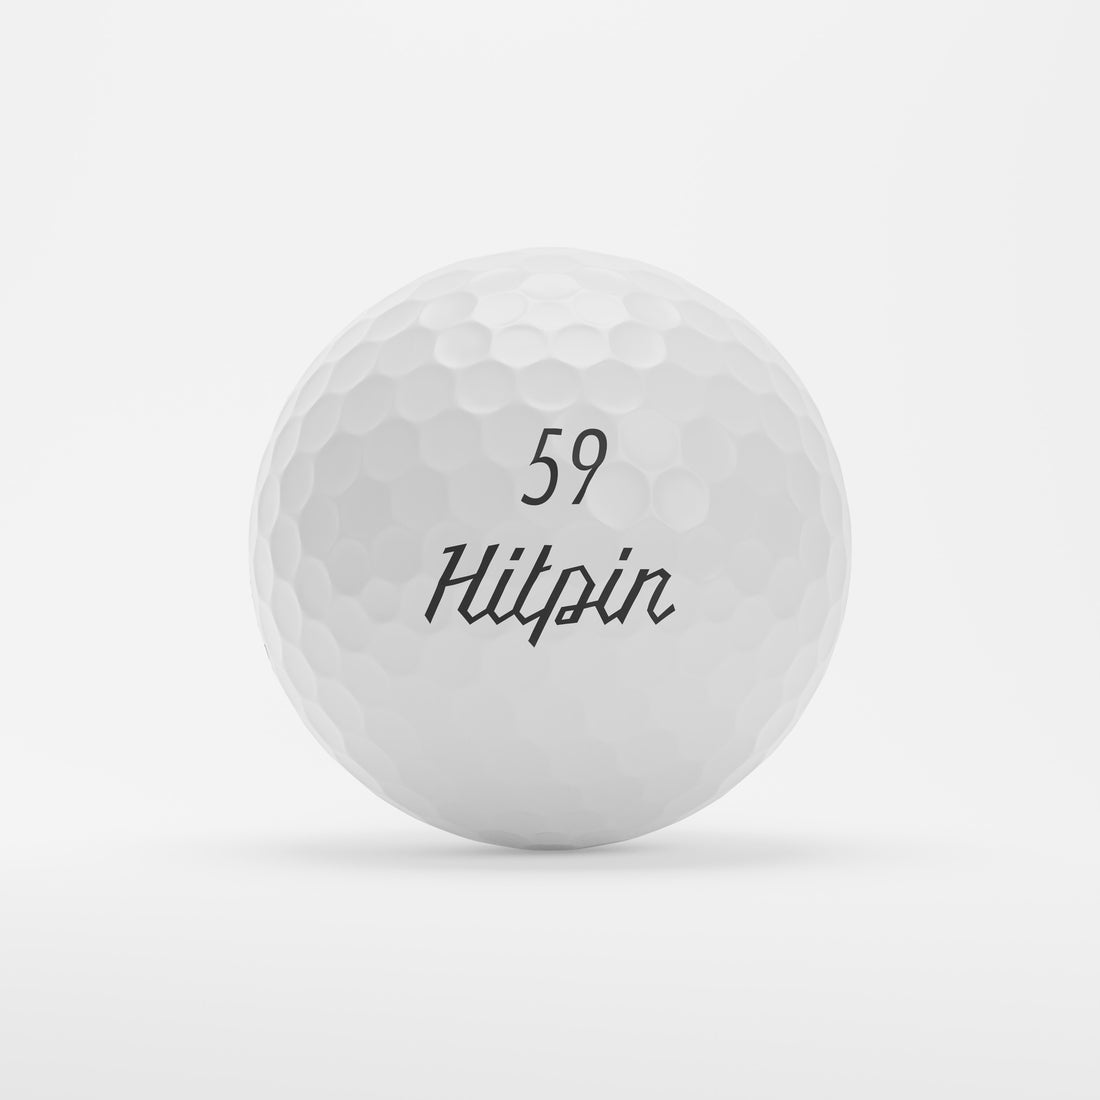 Hitpin Pro 59 White